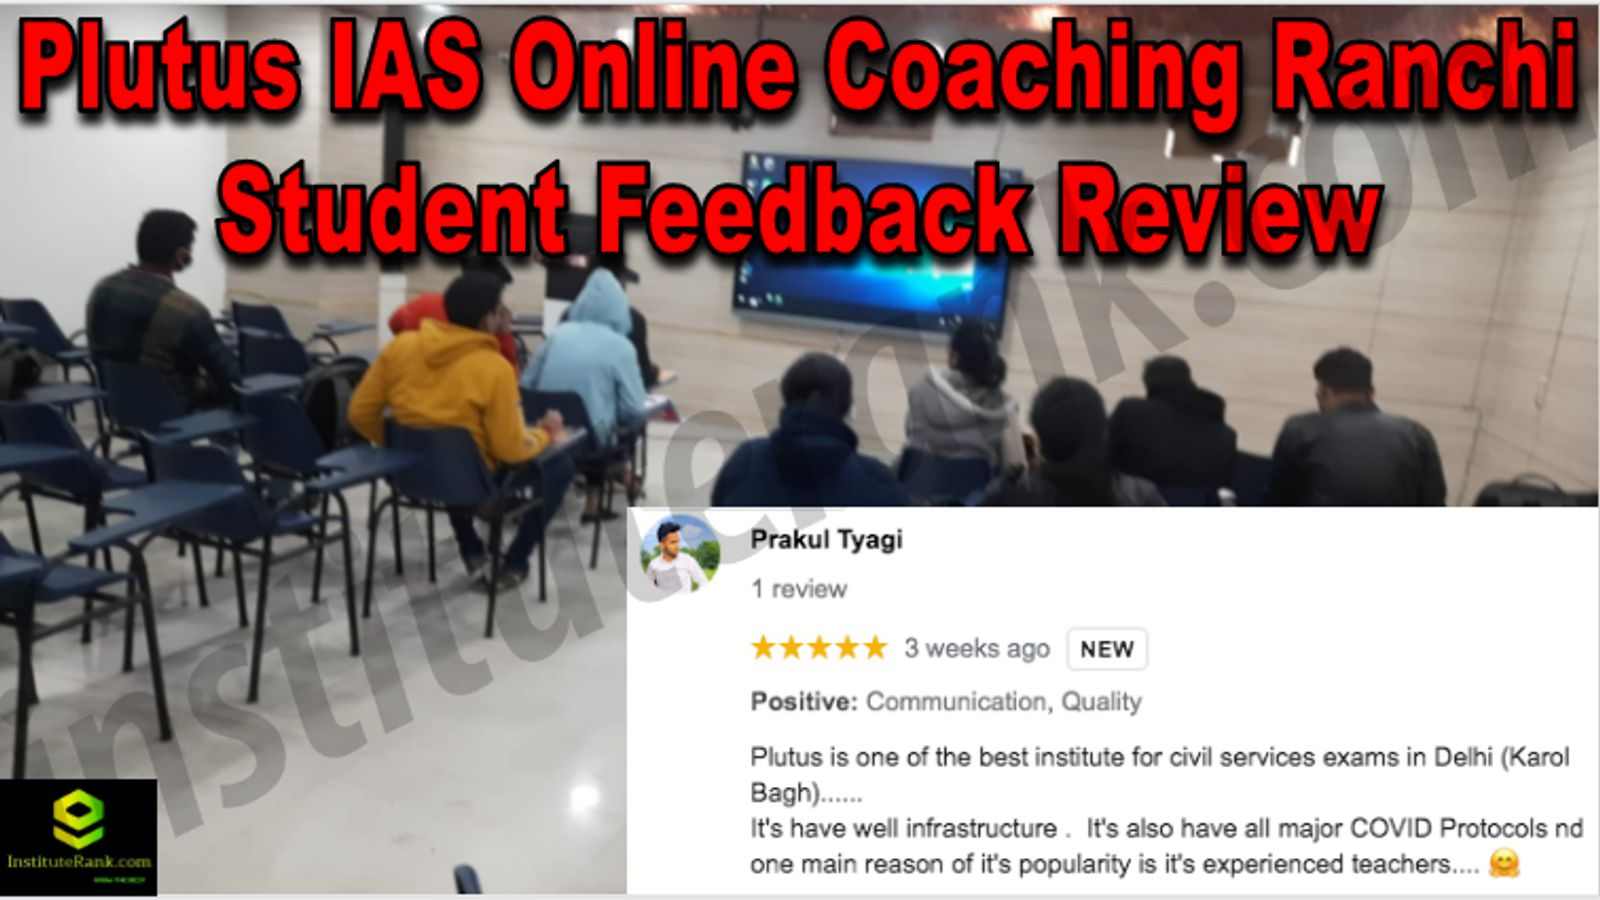 Plutus IAS Online Coaching Ranchi Student Feedback Reviews